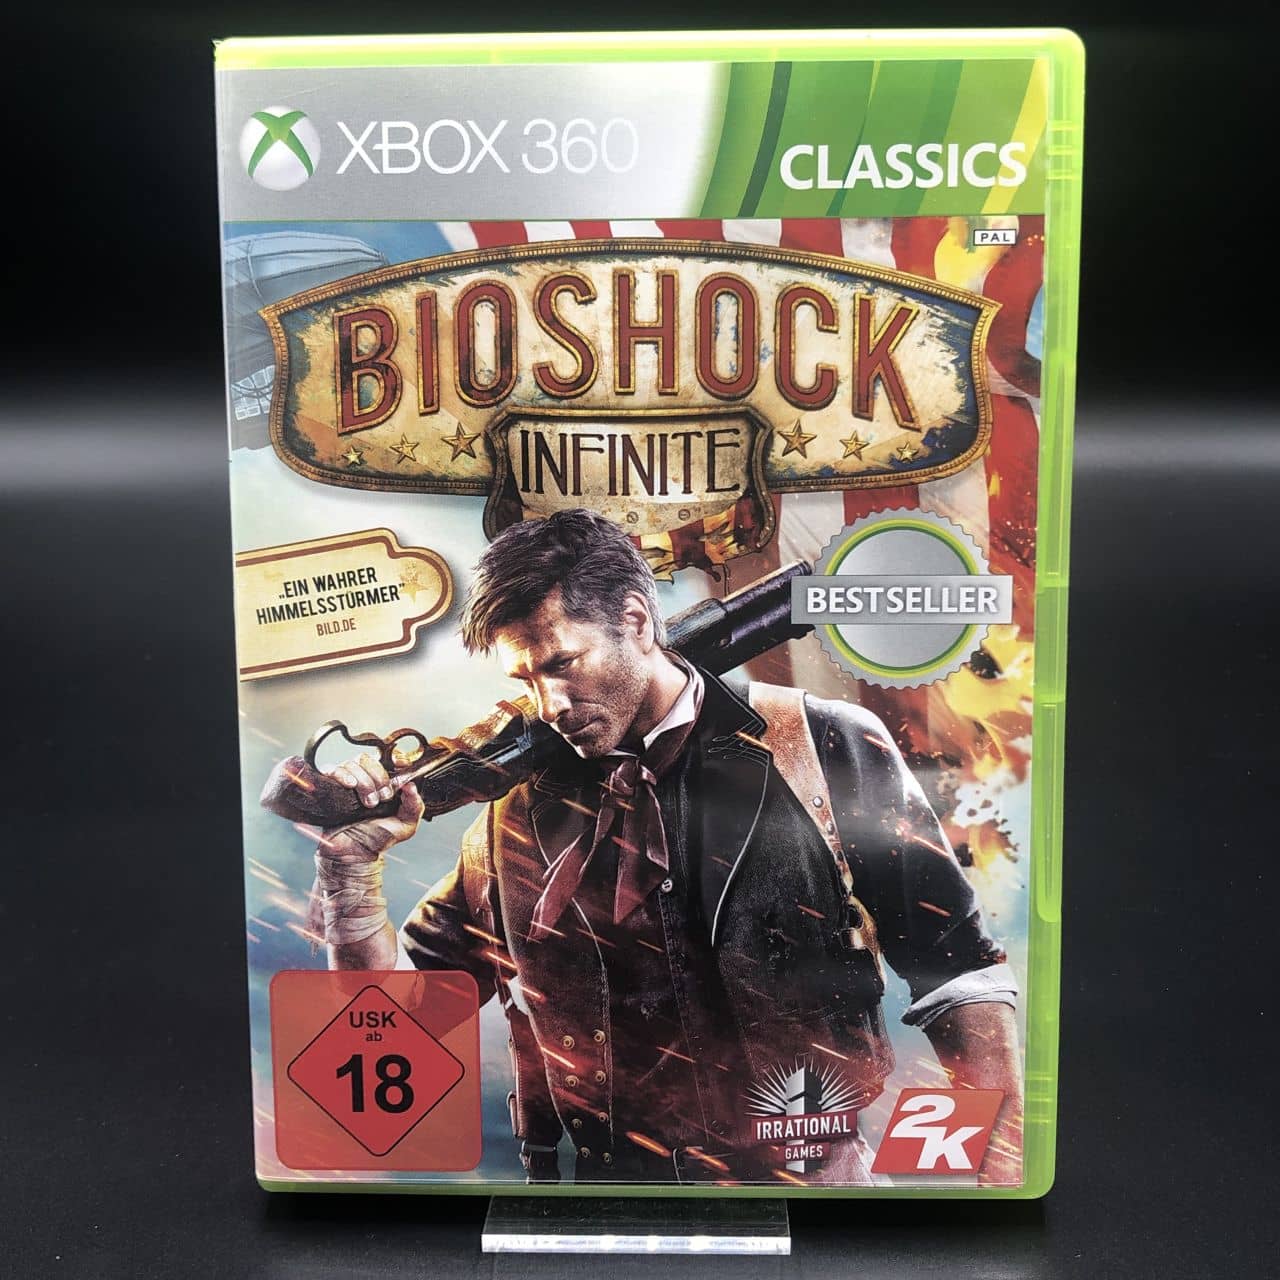 BioShock Infinite (Classics) (Komplett) (Sehr gut) XBOX 360 (FSK18)